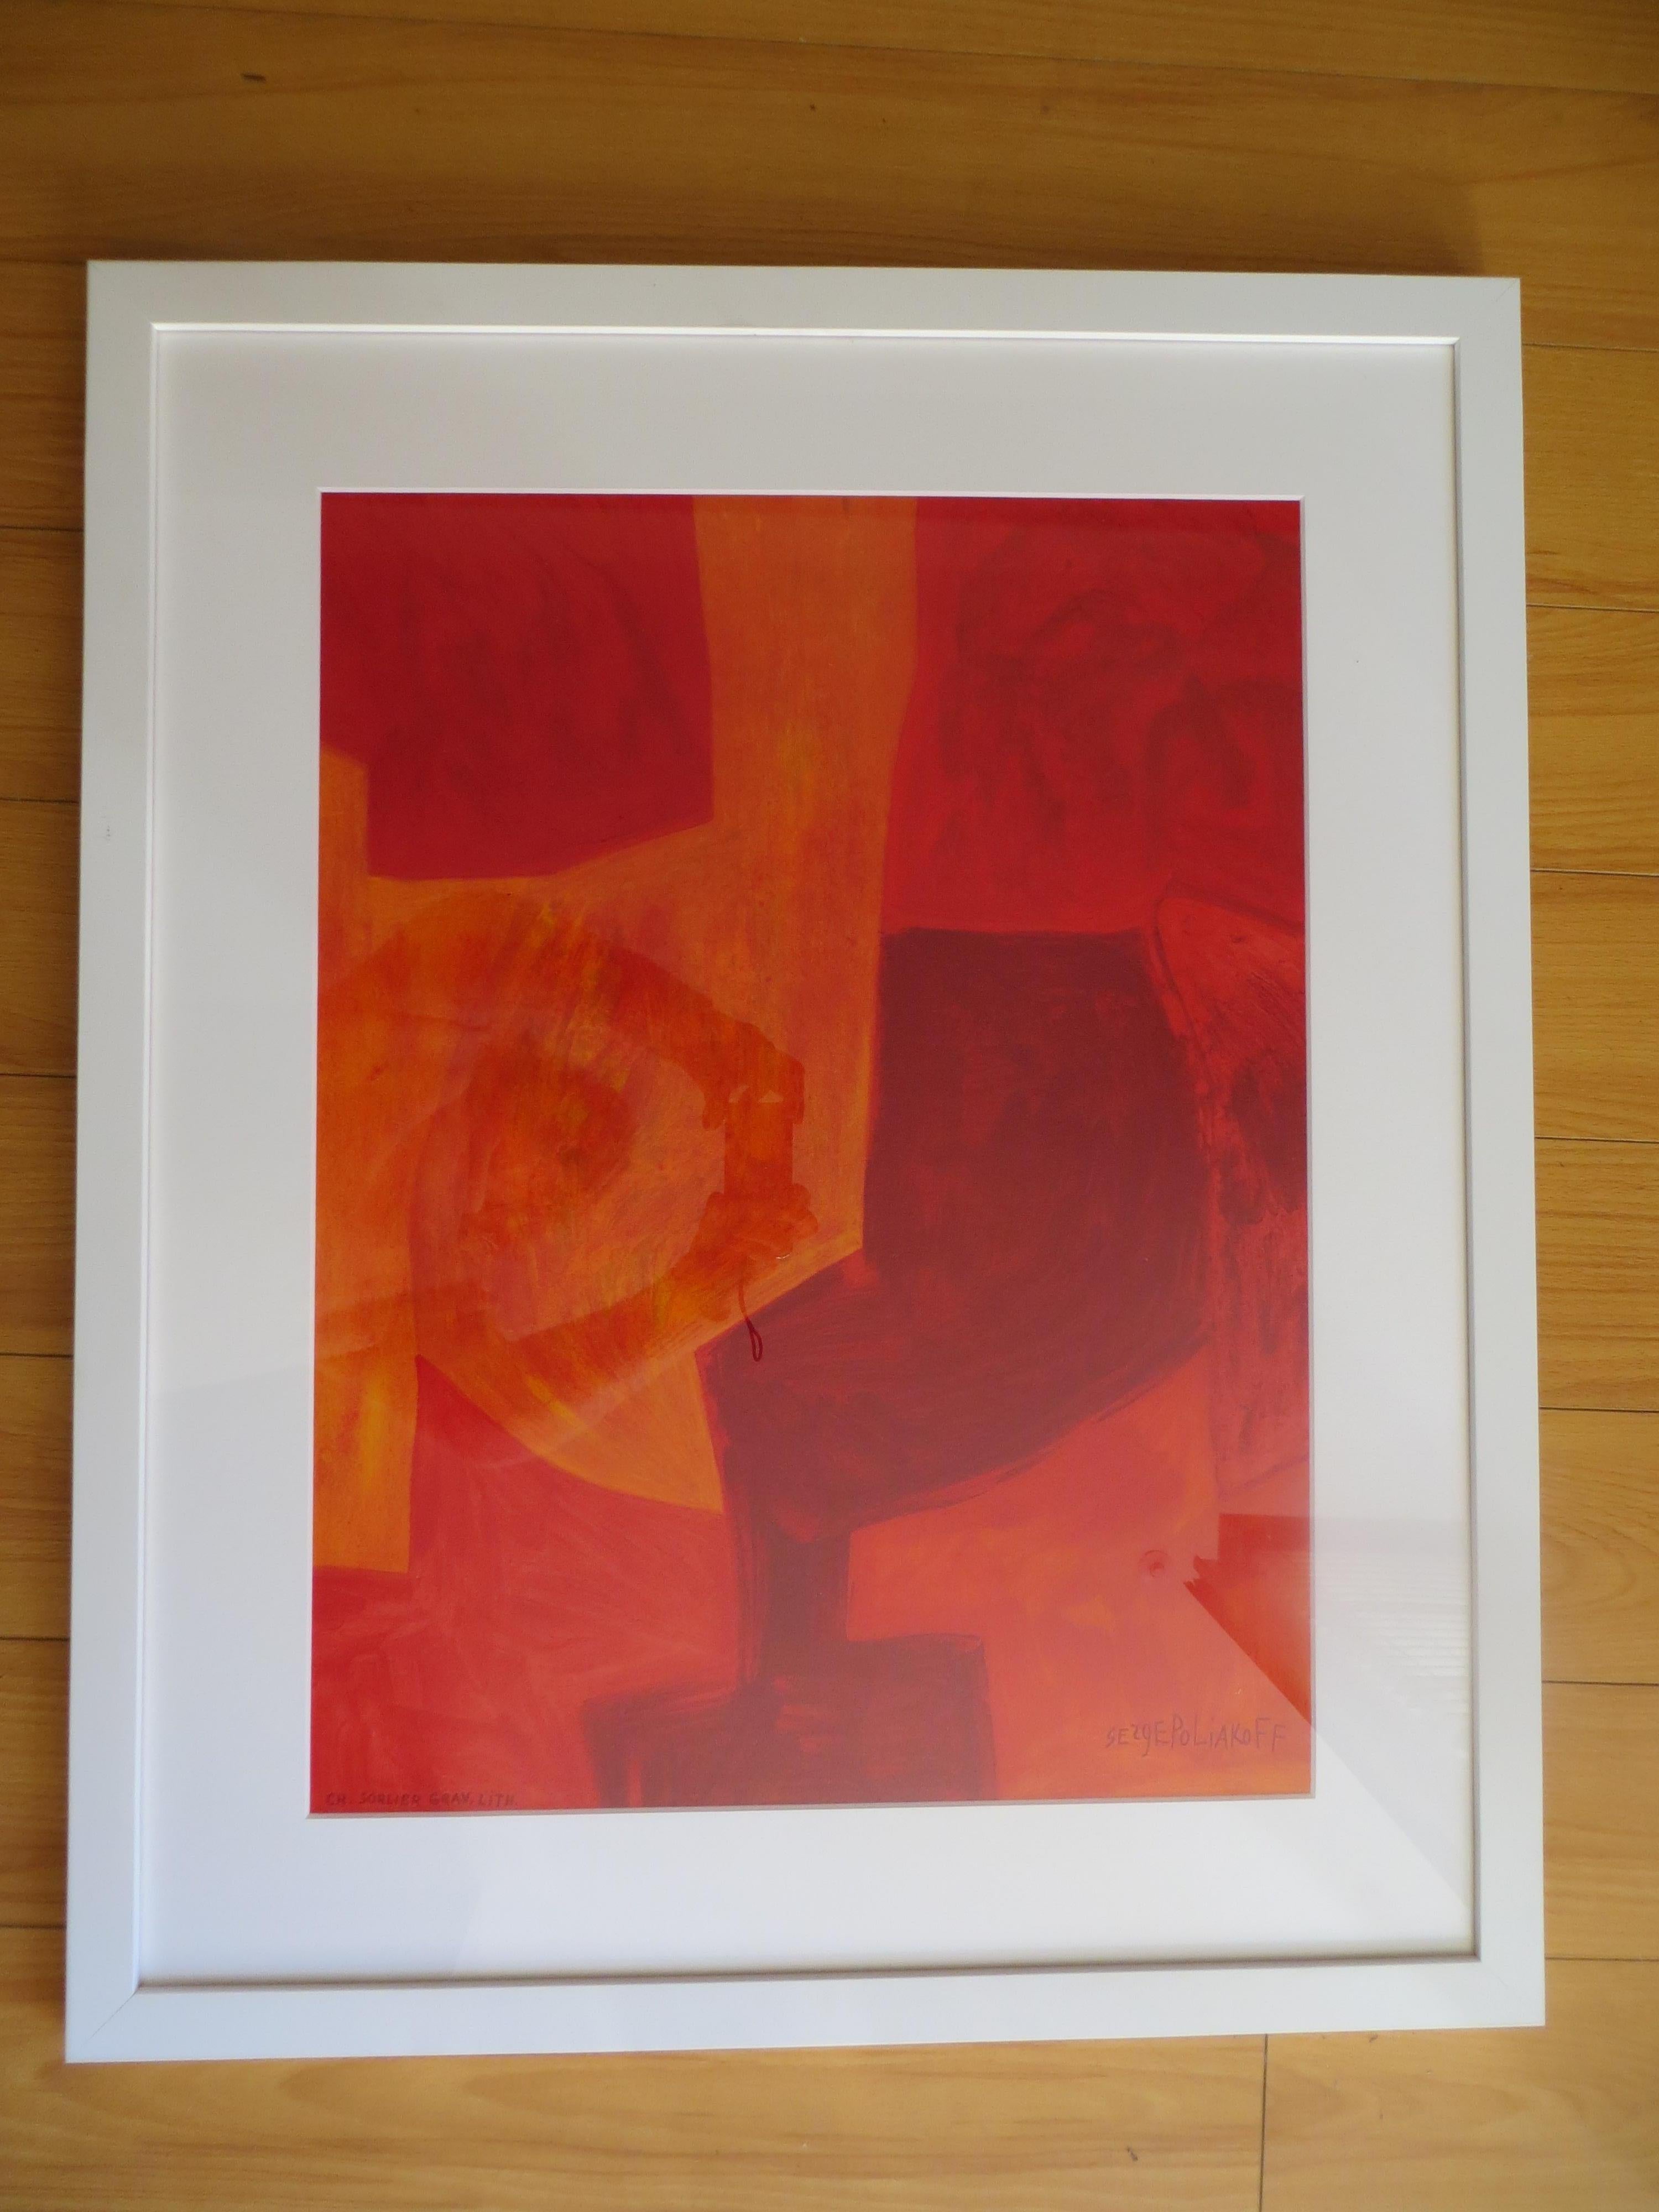 Abstract Print (After) Serge Poliakoff - Serge Poliakoff, Composition 1975, Lithographie imprimée par Charles Sorlier